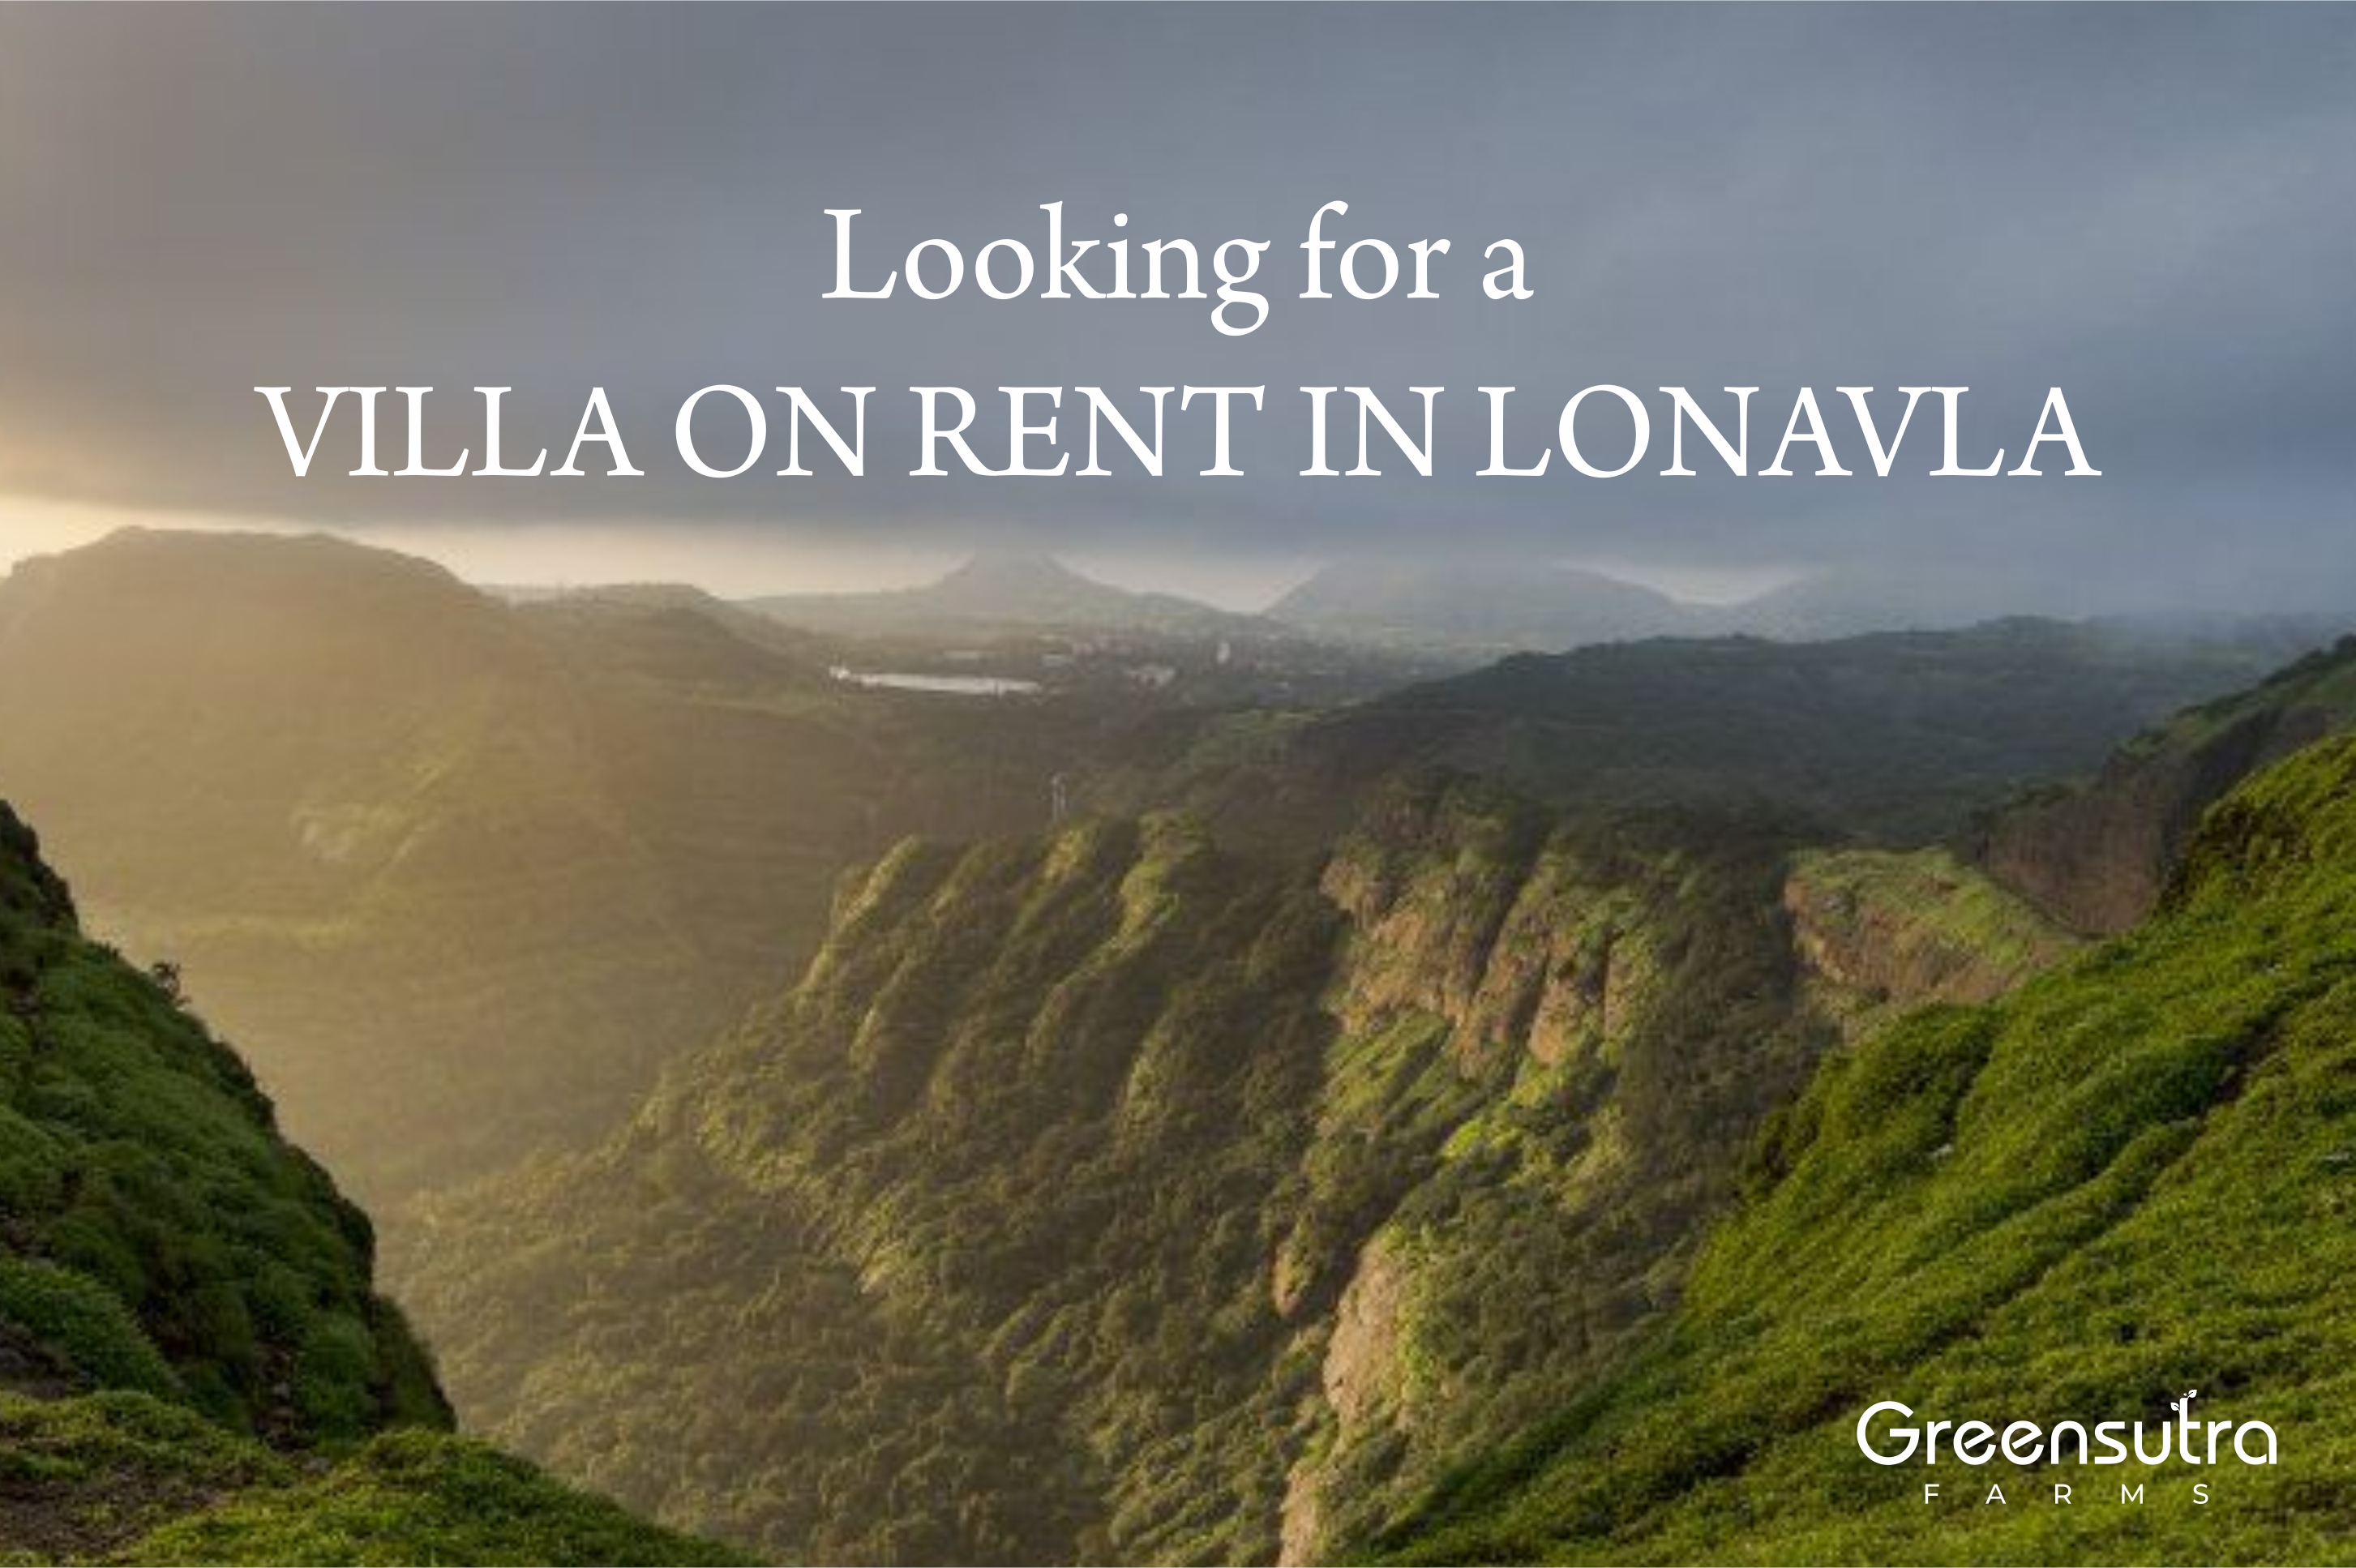 Looking for a villa on rent in Lonavla